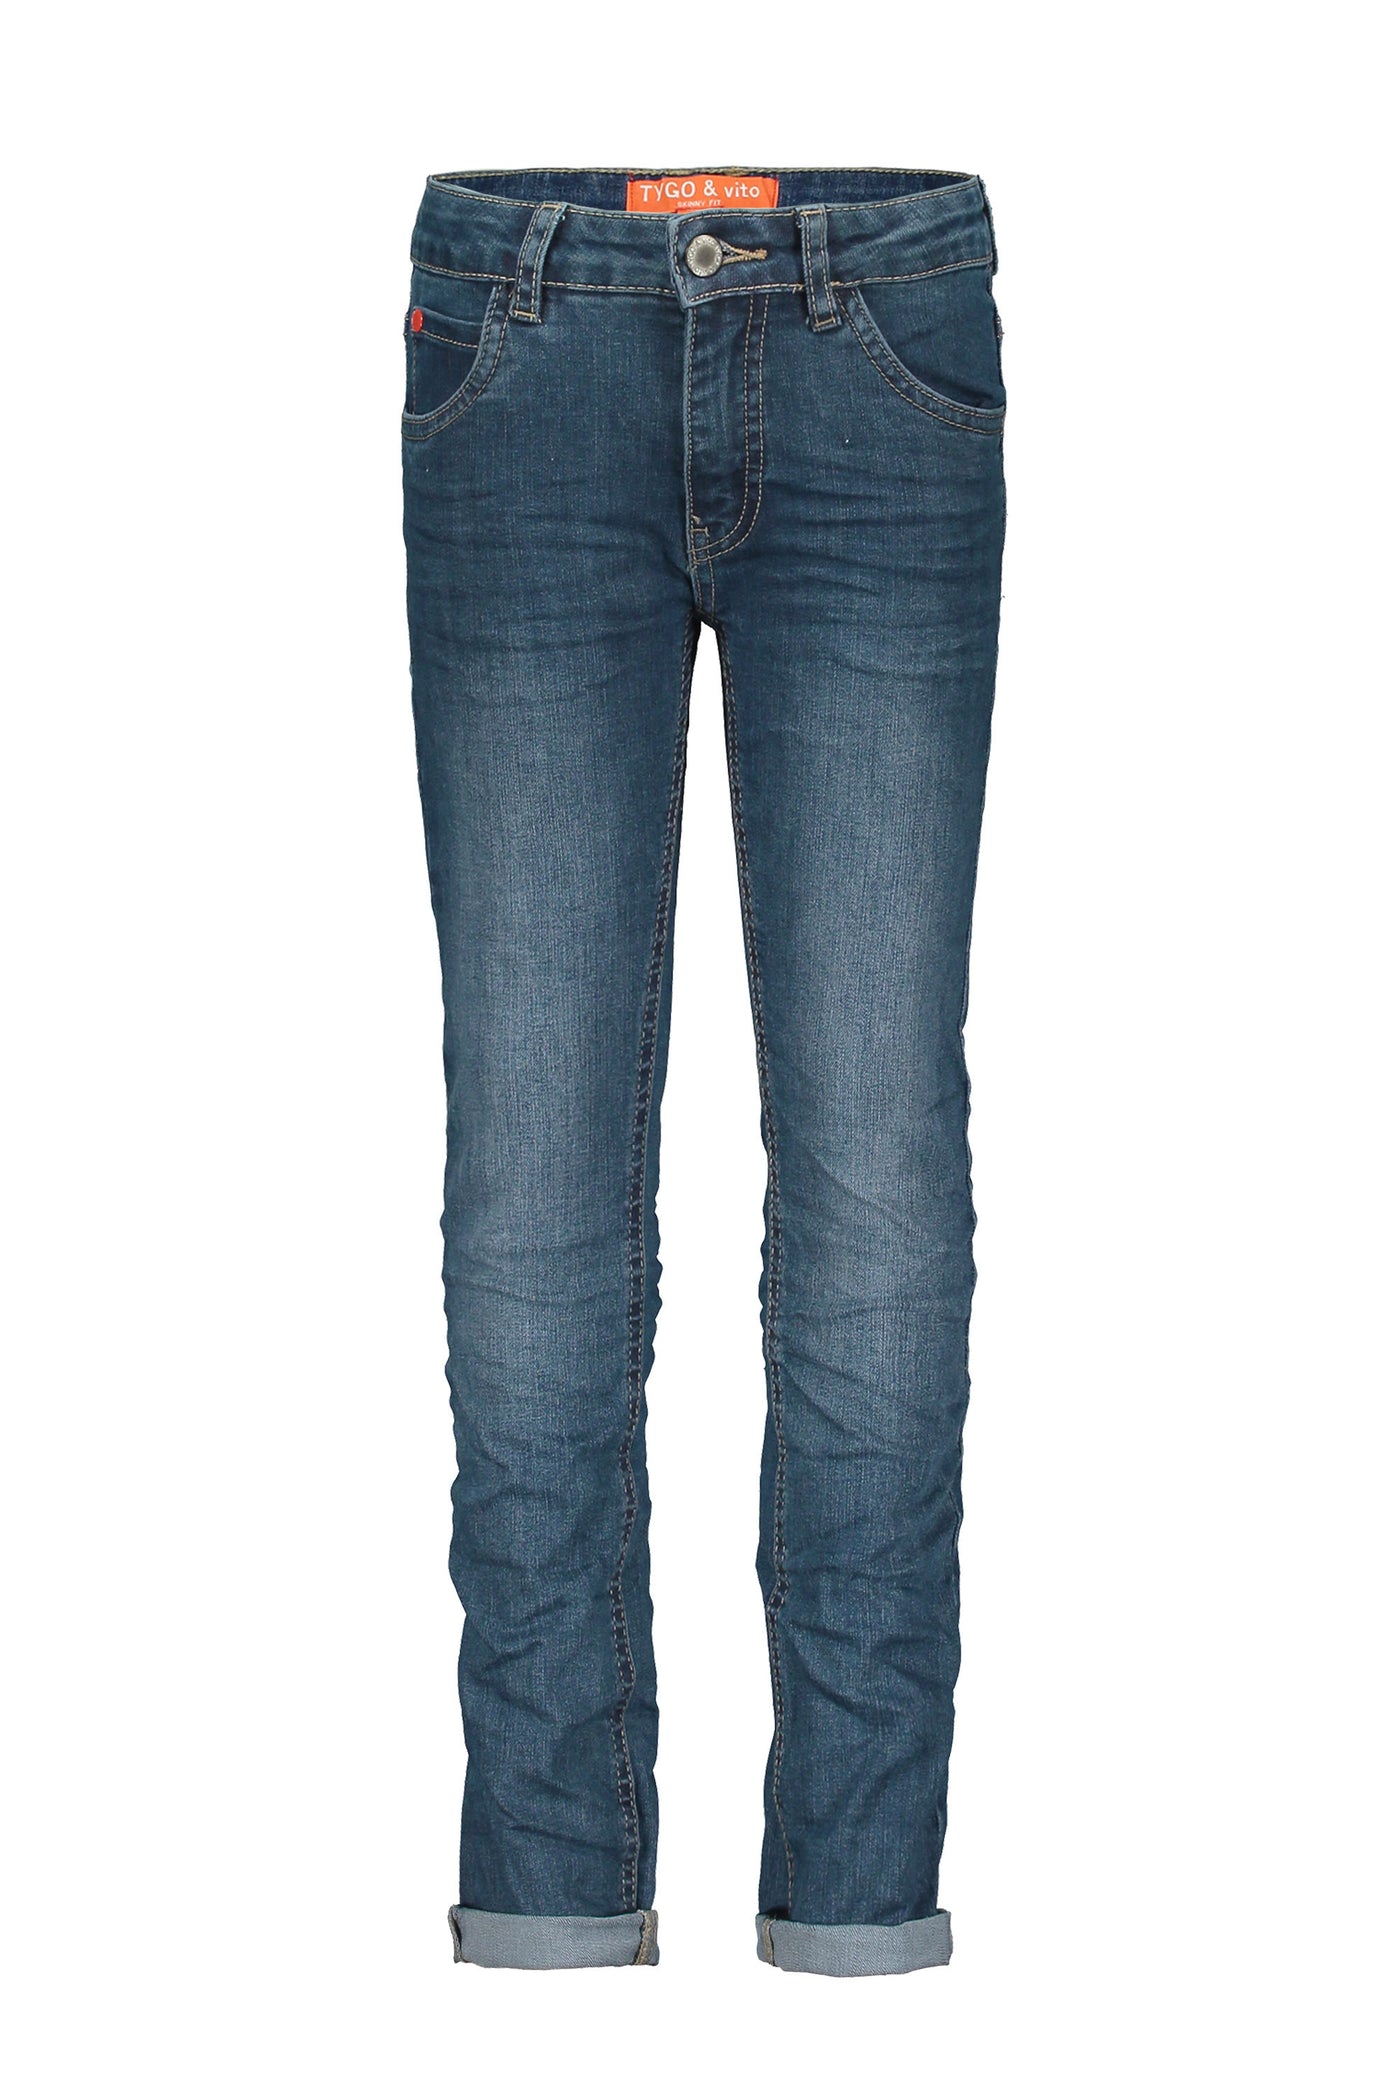 Tygo & Vito slim fit jeans stretch jeans Medium used  XNOOS-6603 802